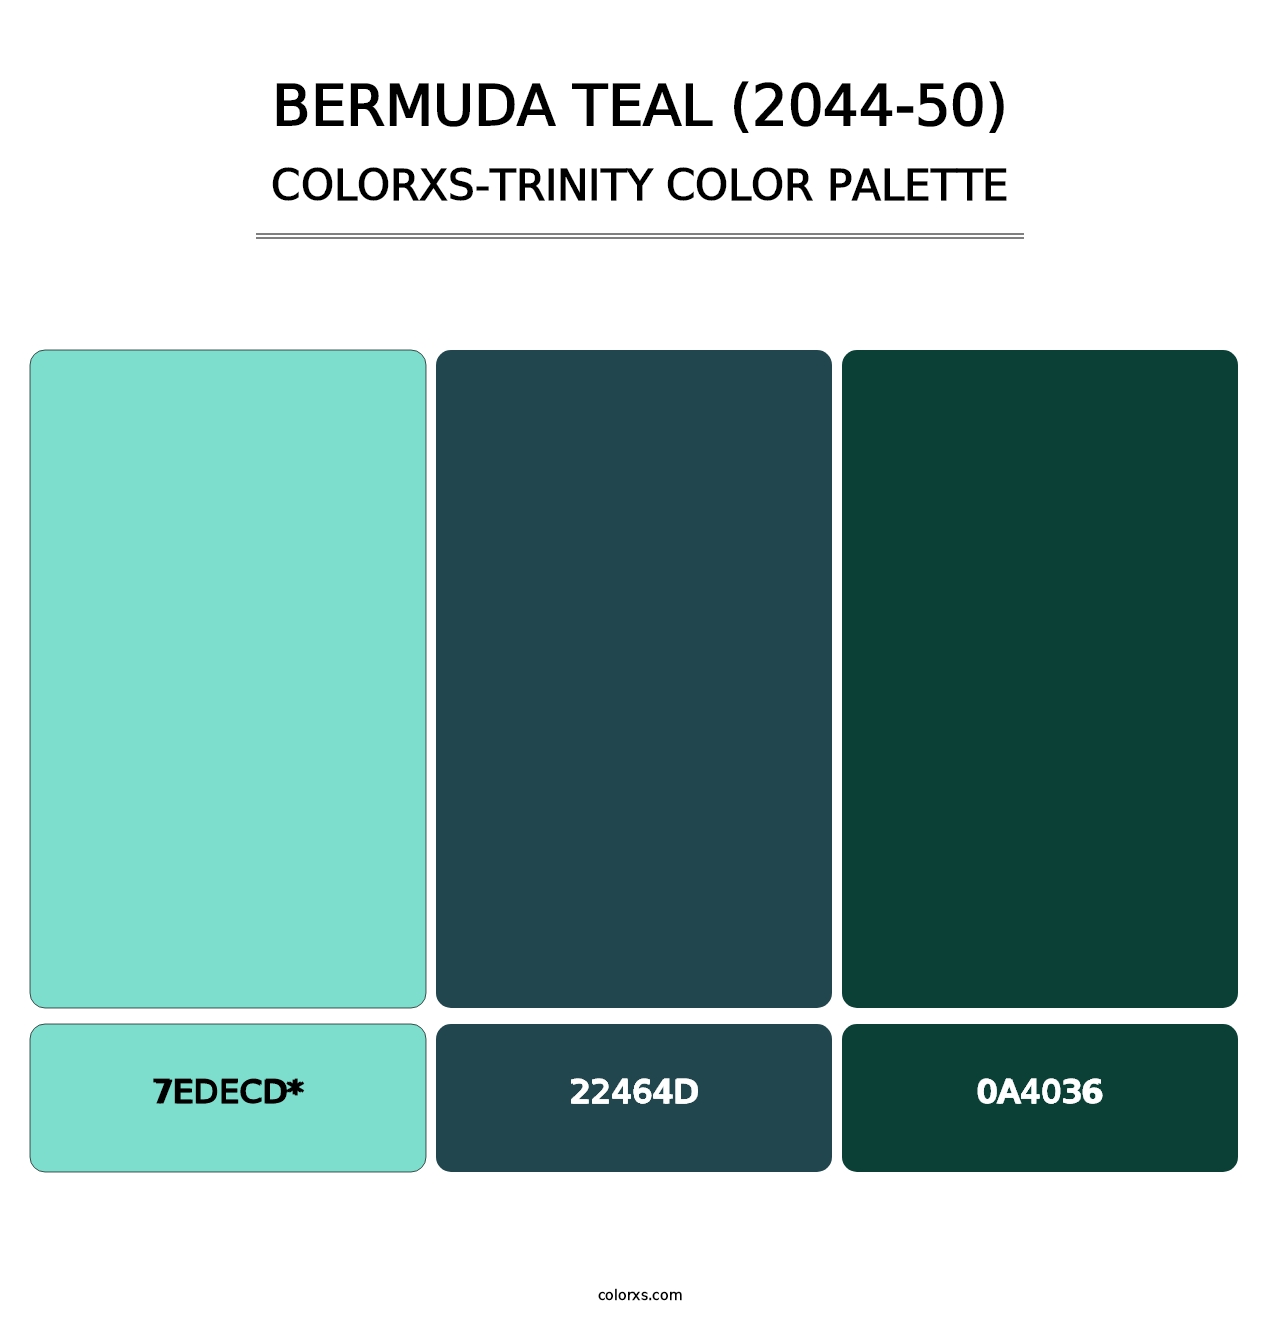 Bermuda Teal (2044-50) - Colorxs Trinity Palette